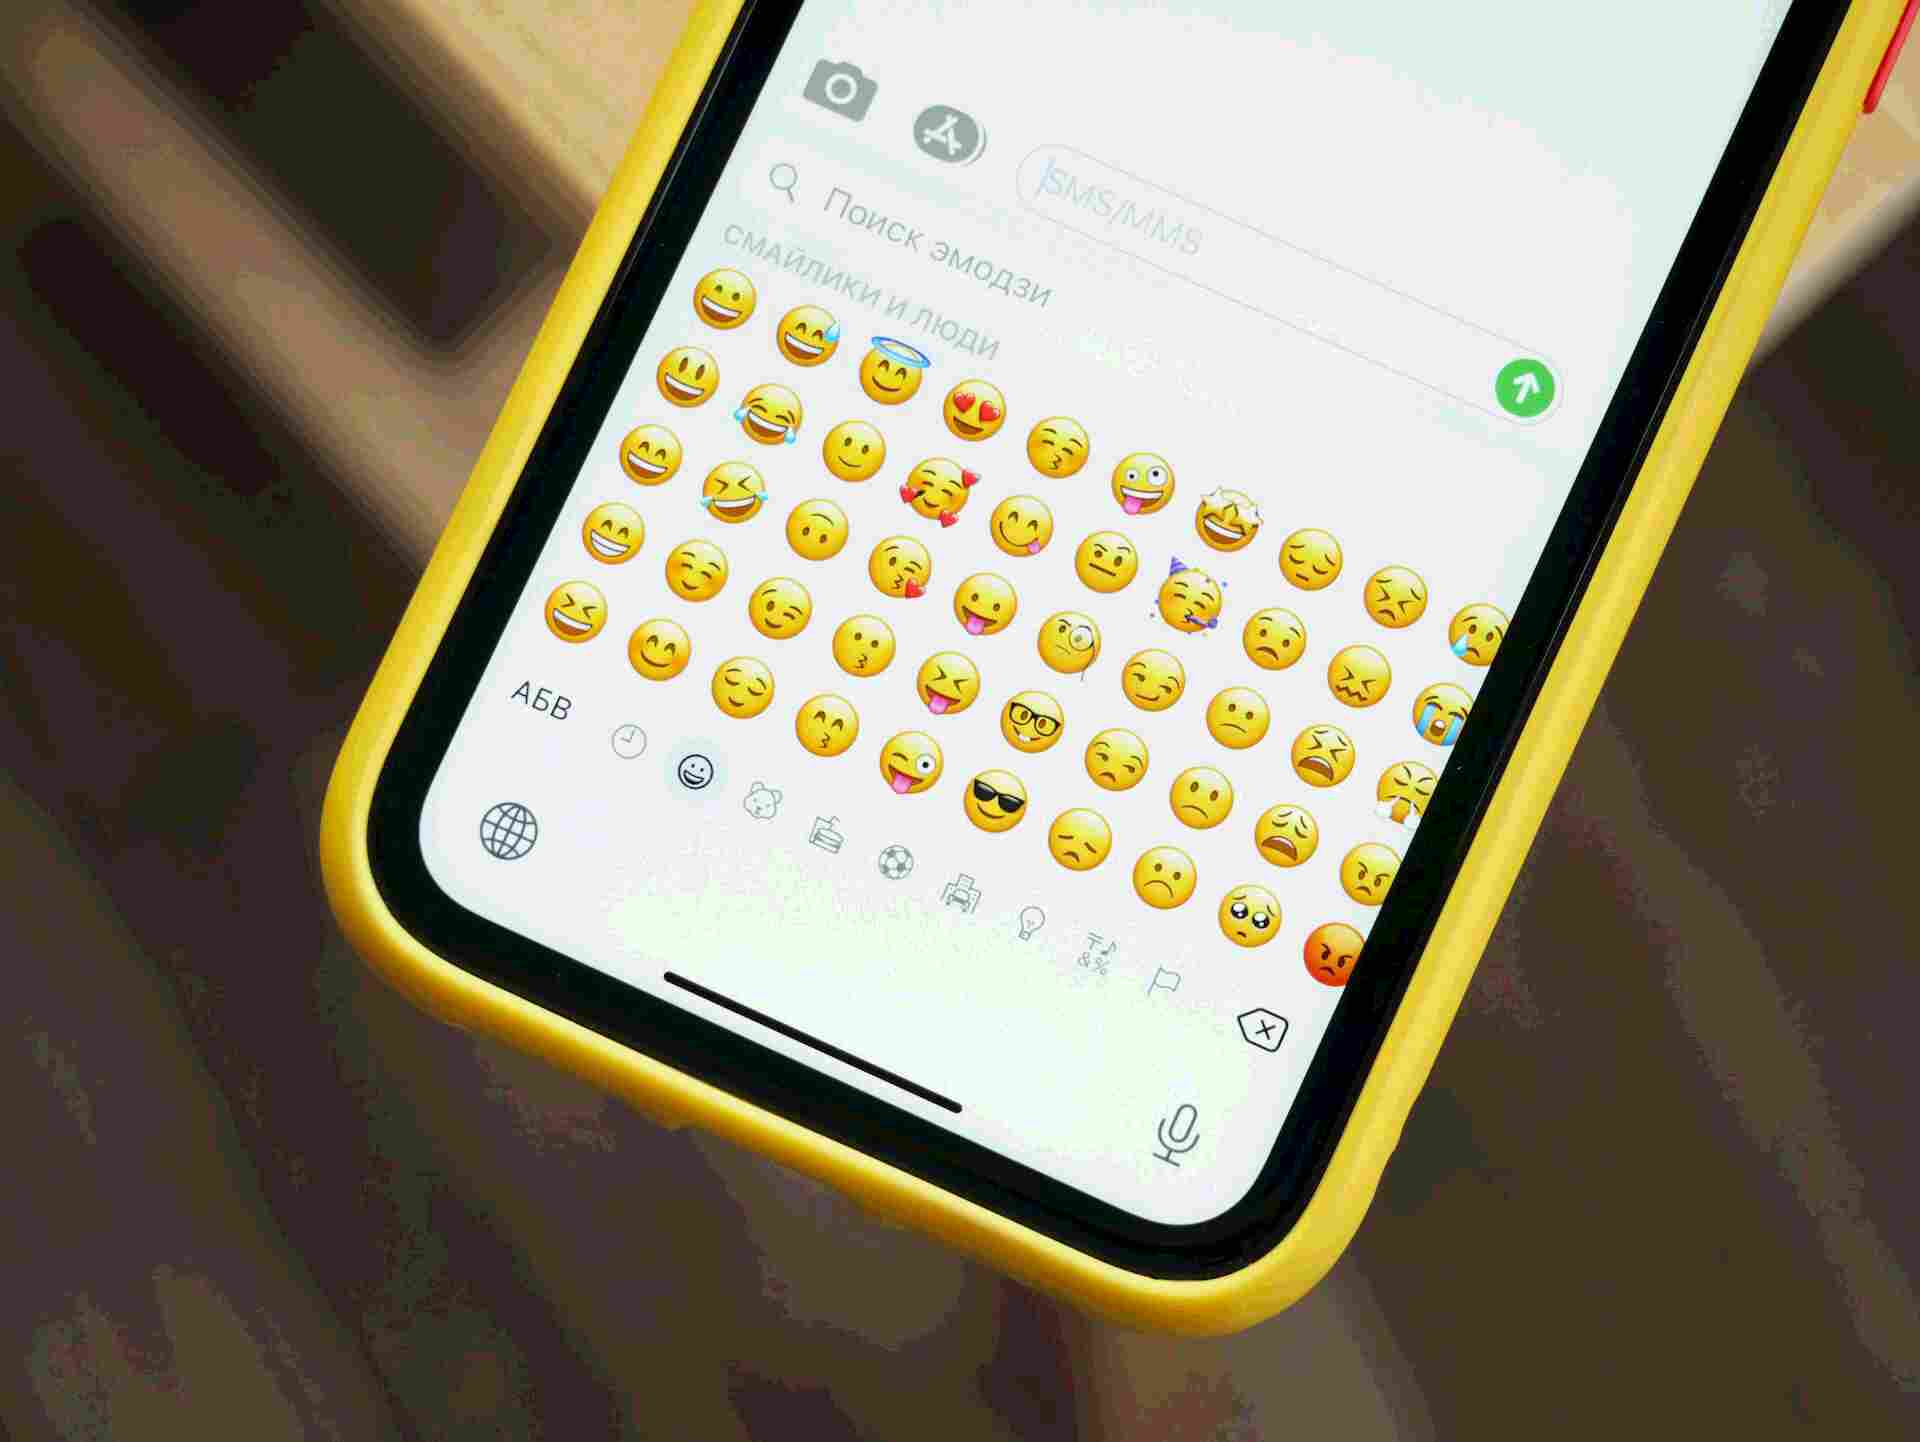 Add the emojis